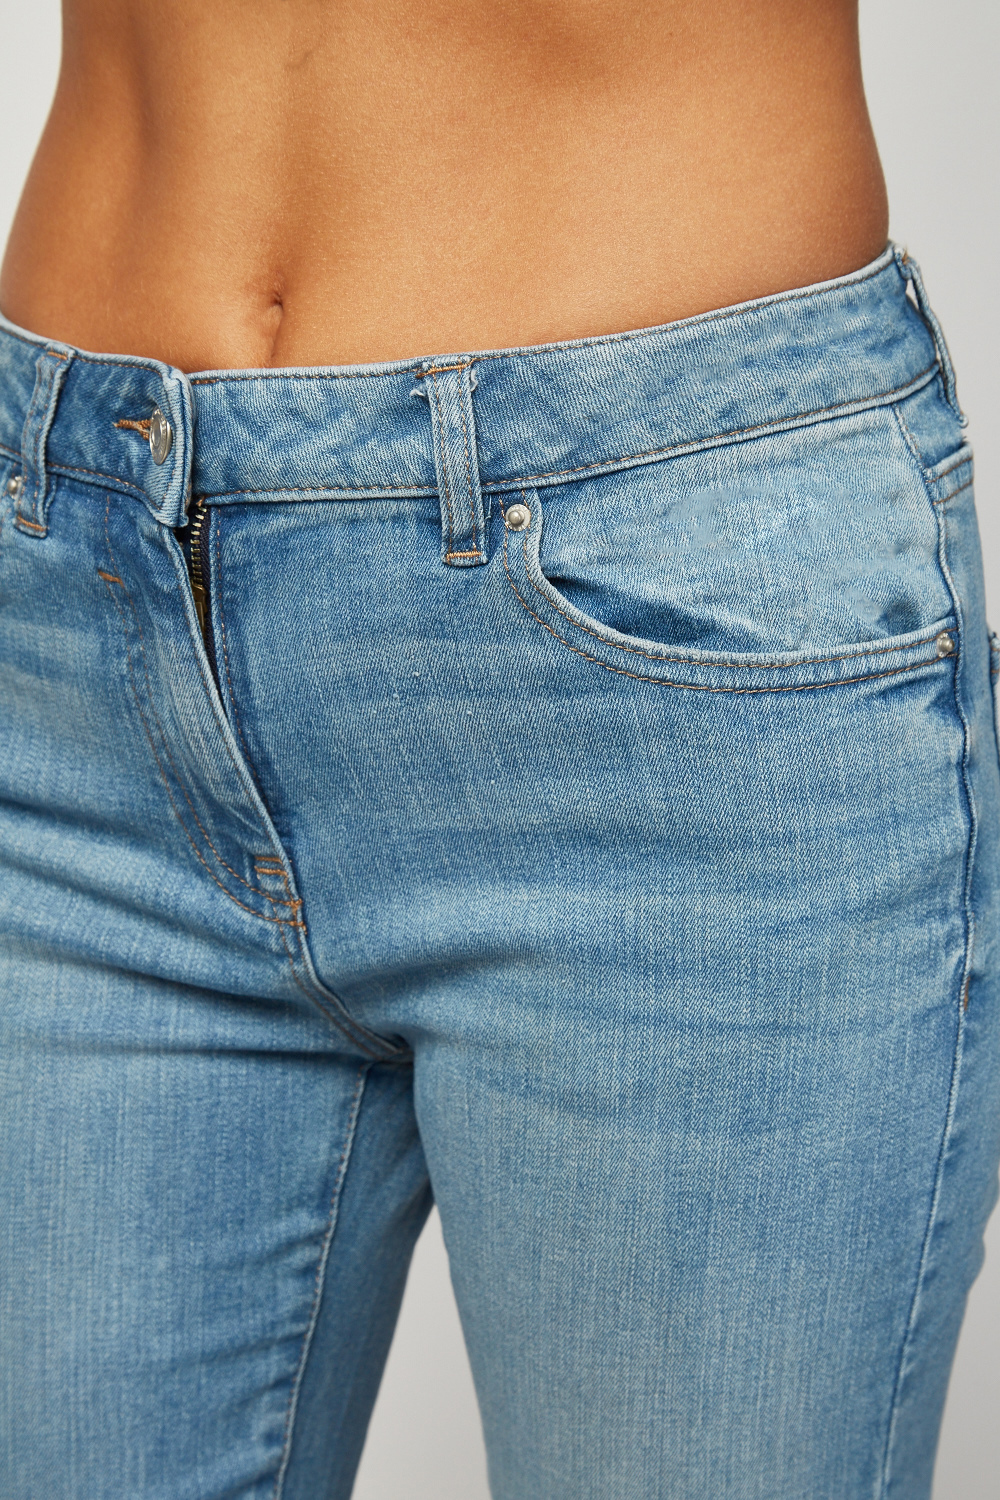 Low Waist Straight Crop Jeans - Just $3